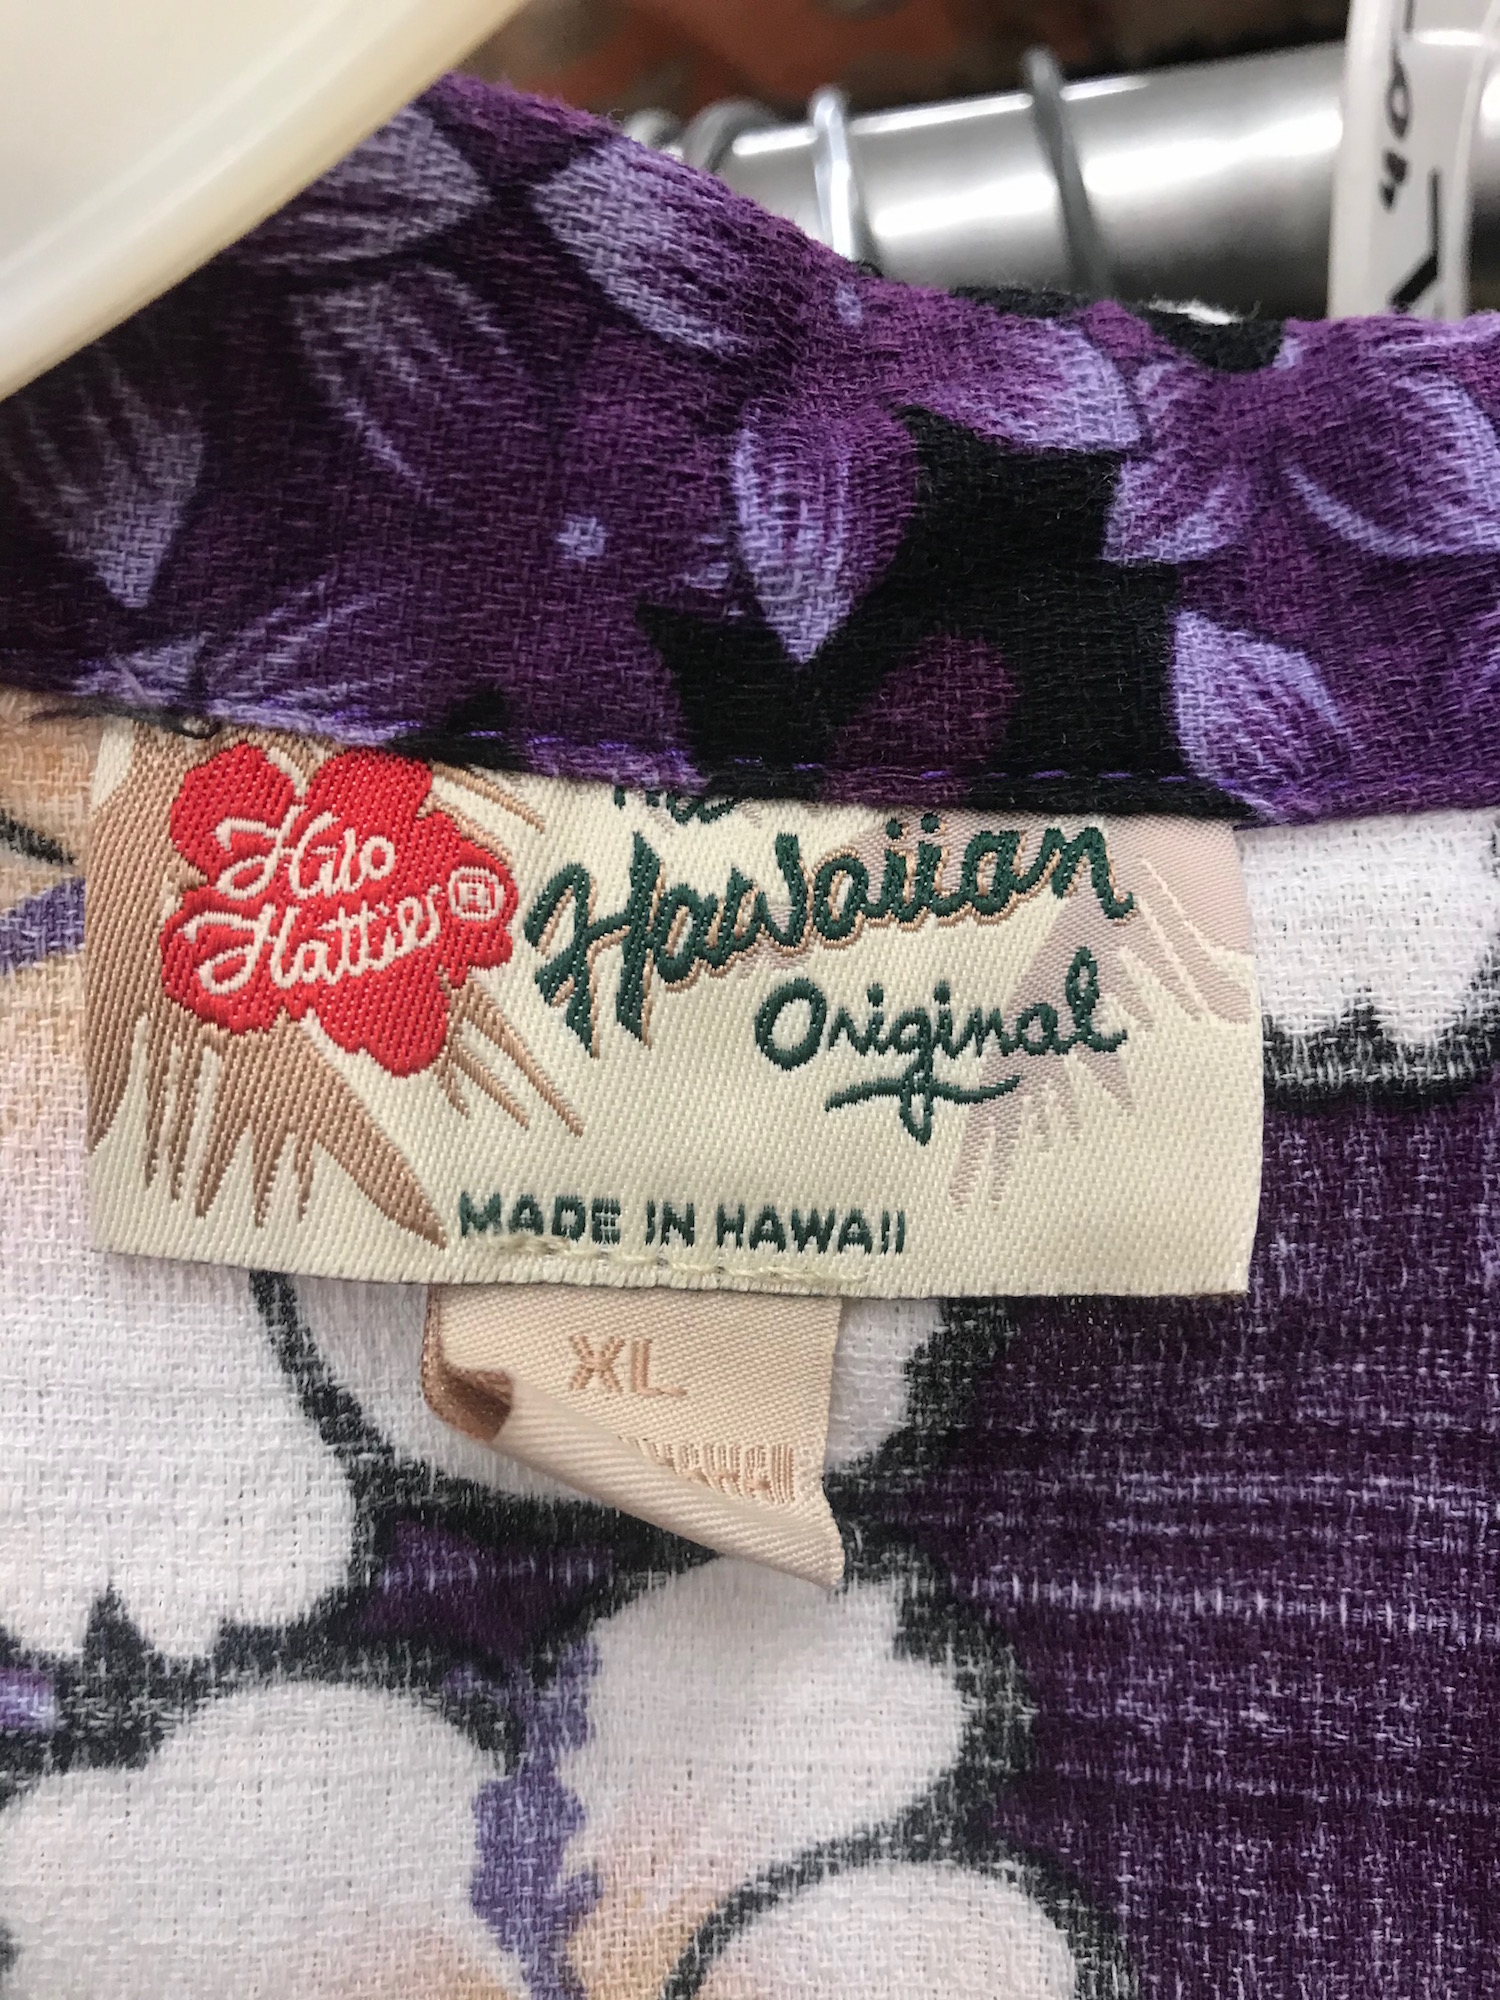 Hilo Hattie Vintage Hawaiian Top - Tucson Thrift Shop